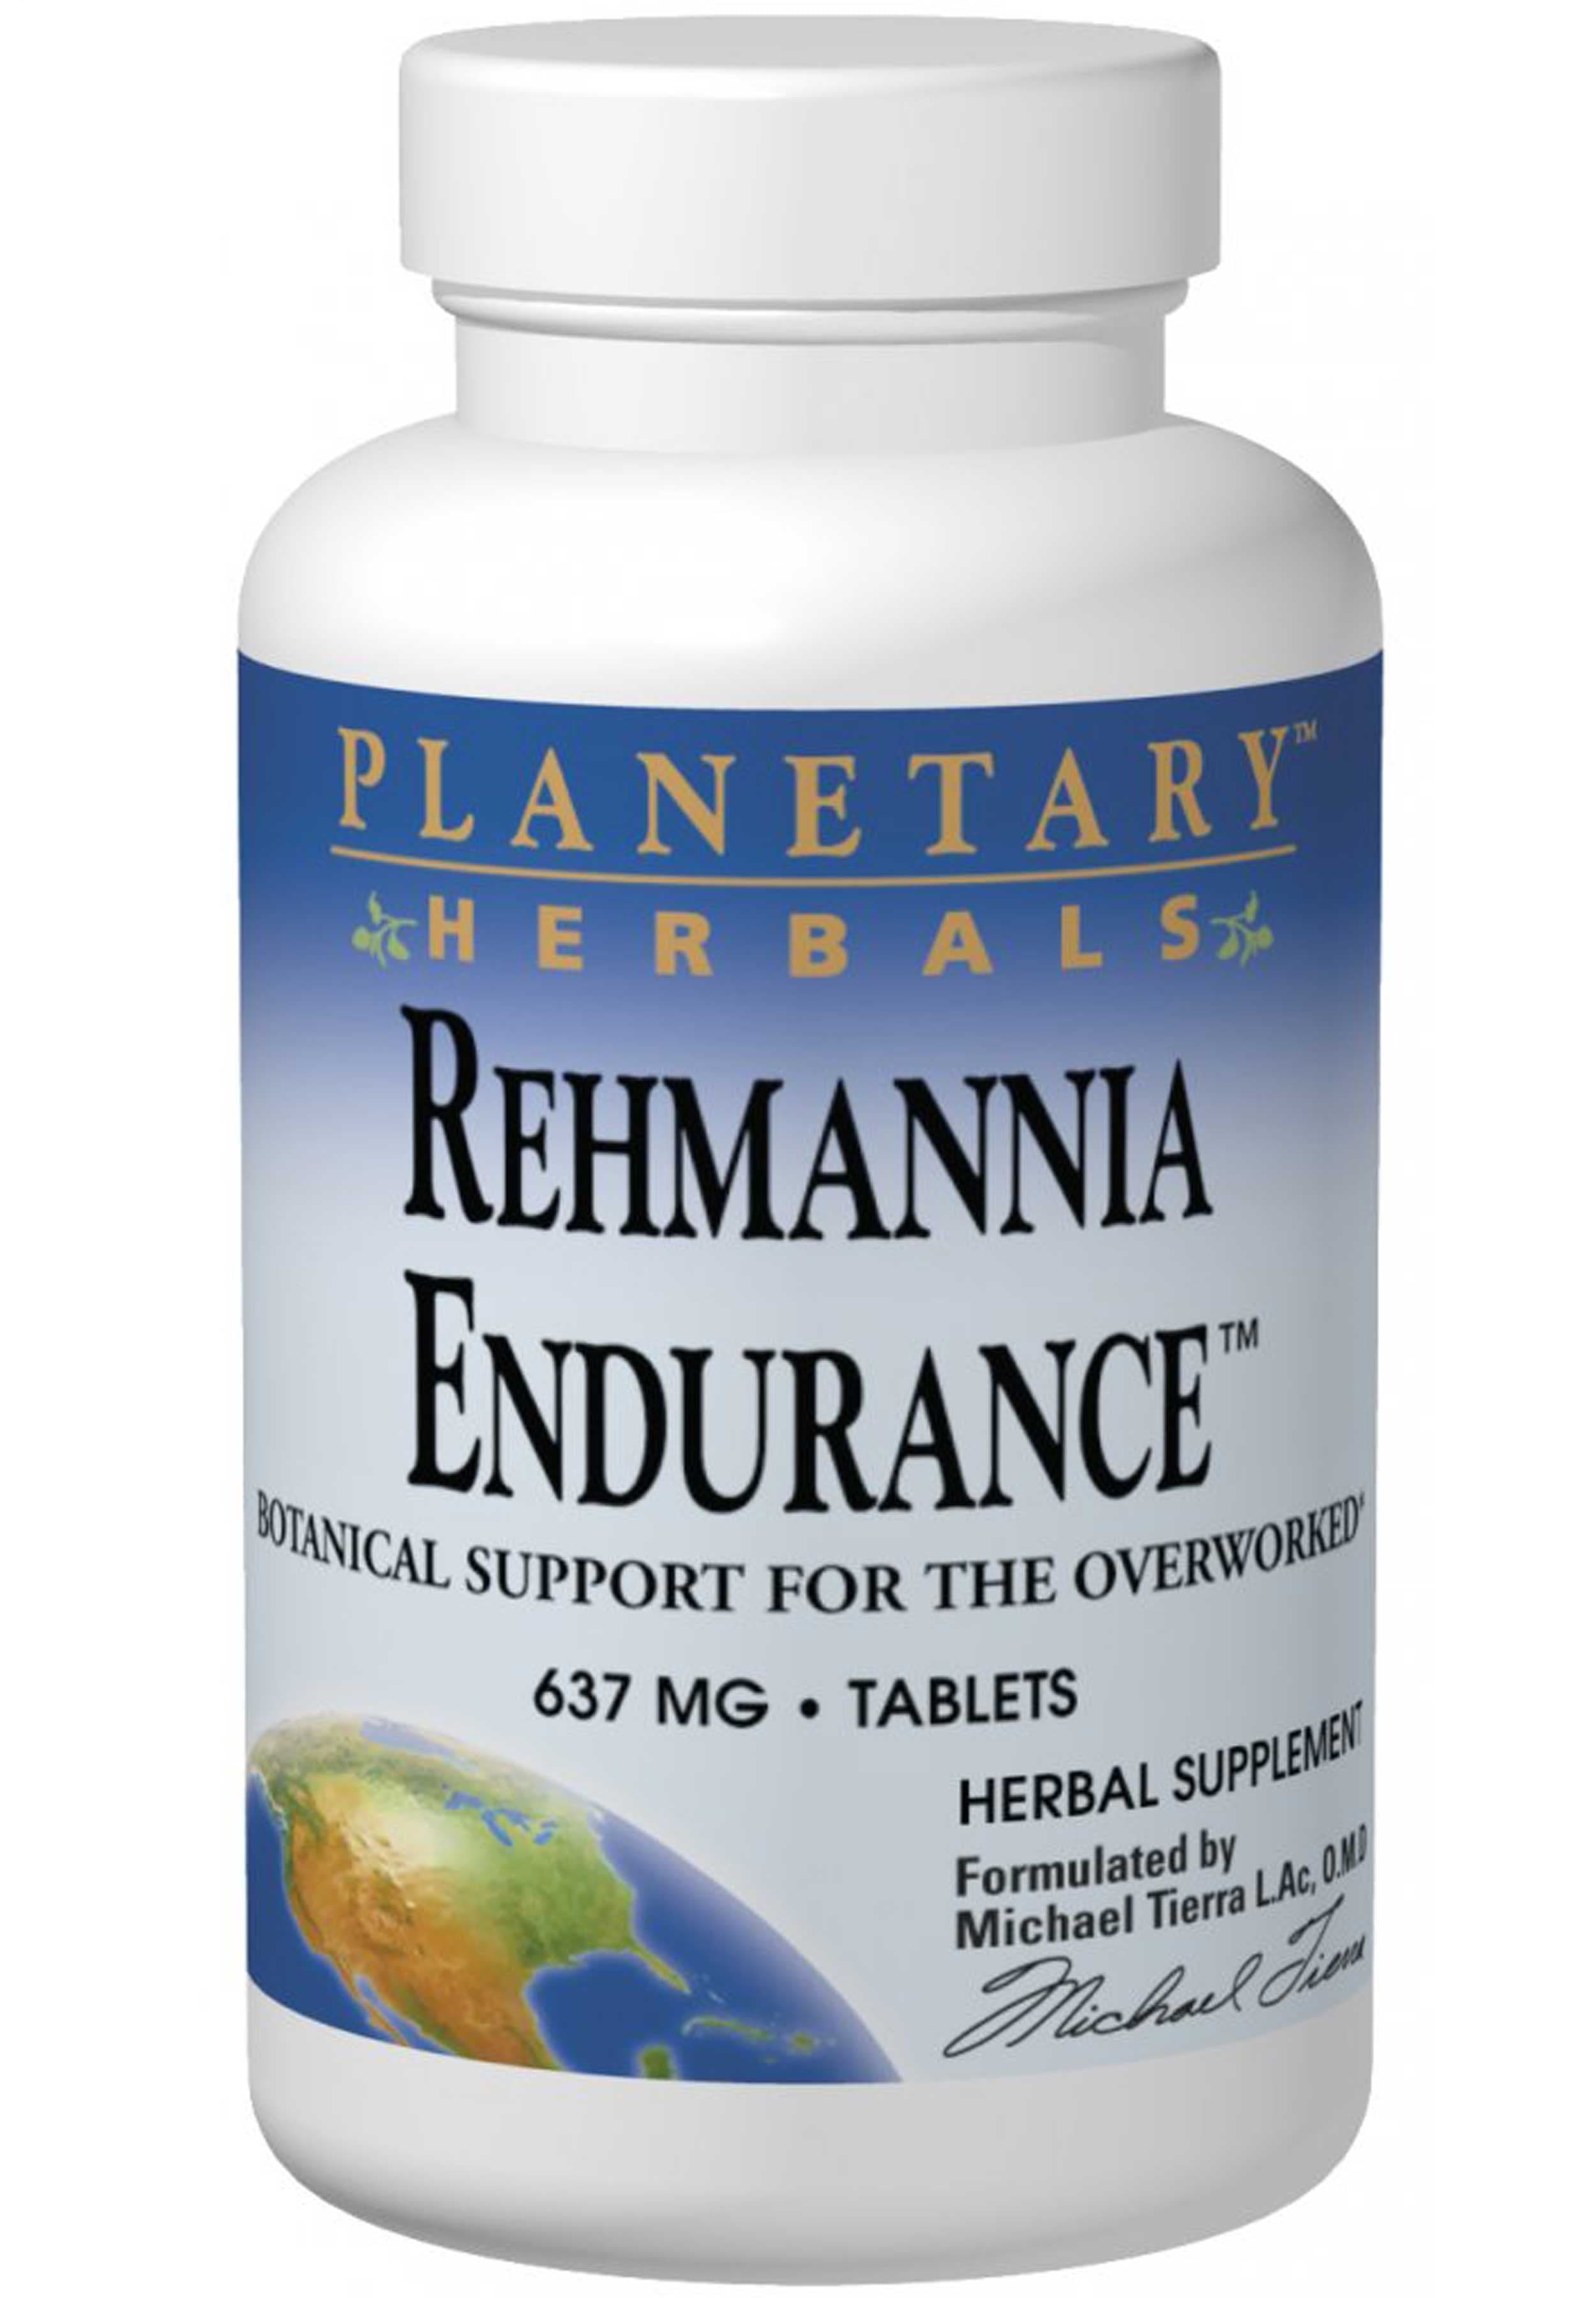 Planetary Herbals Rehmannia Endurance™